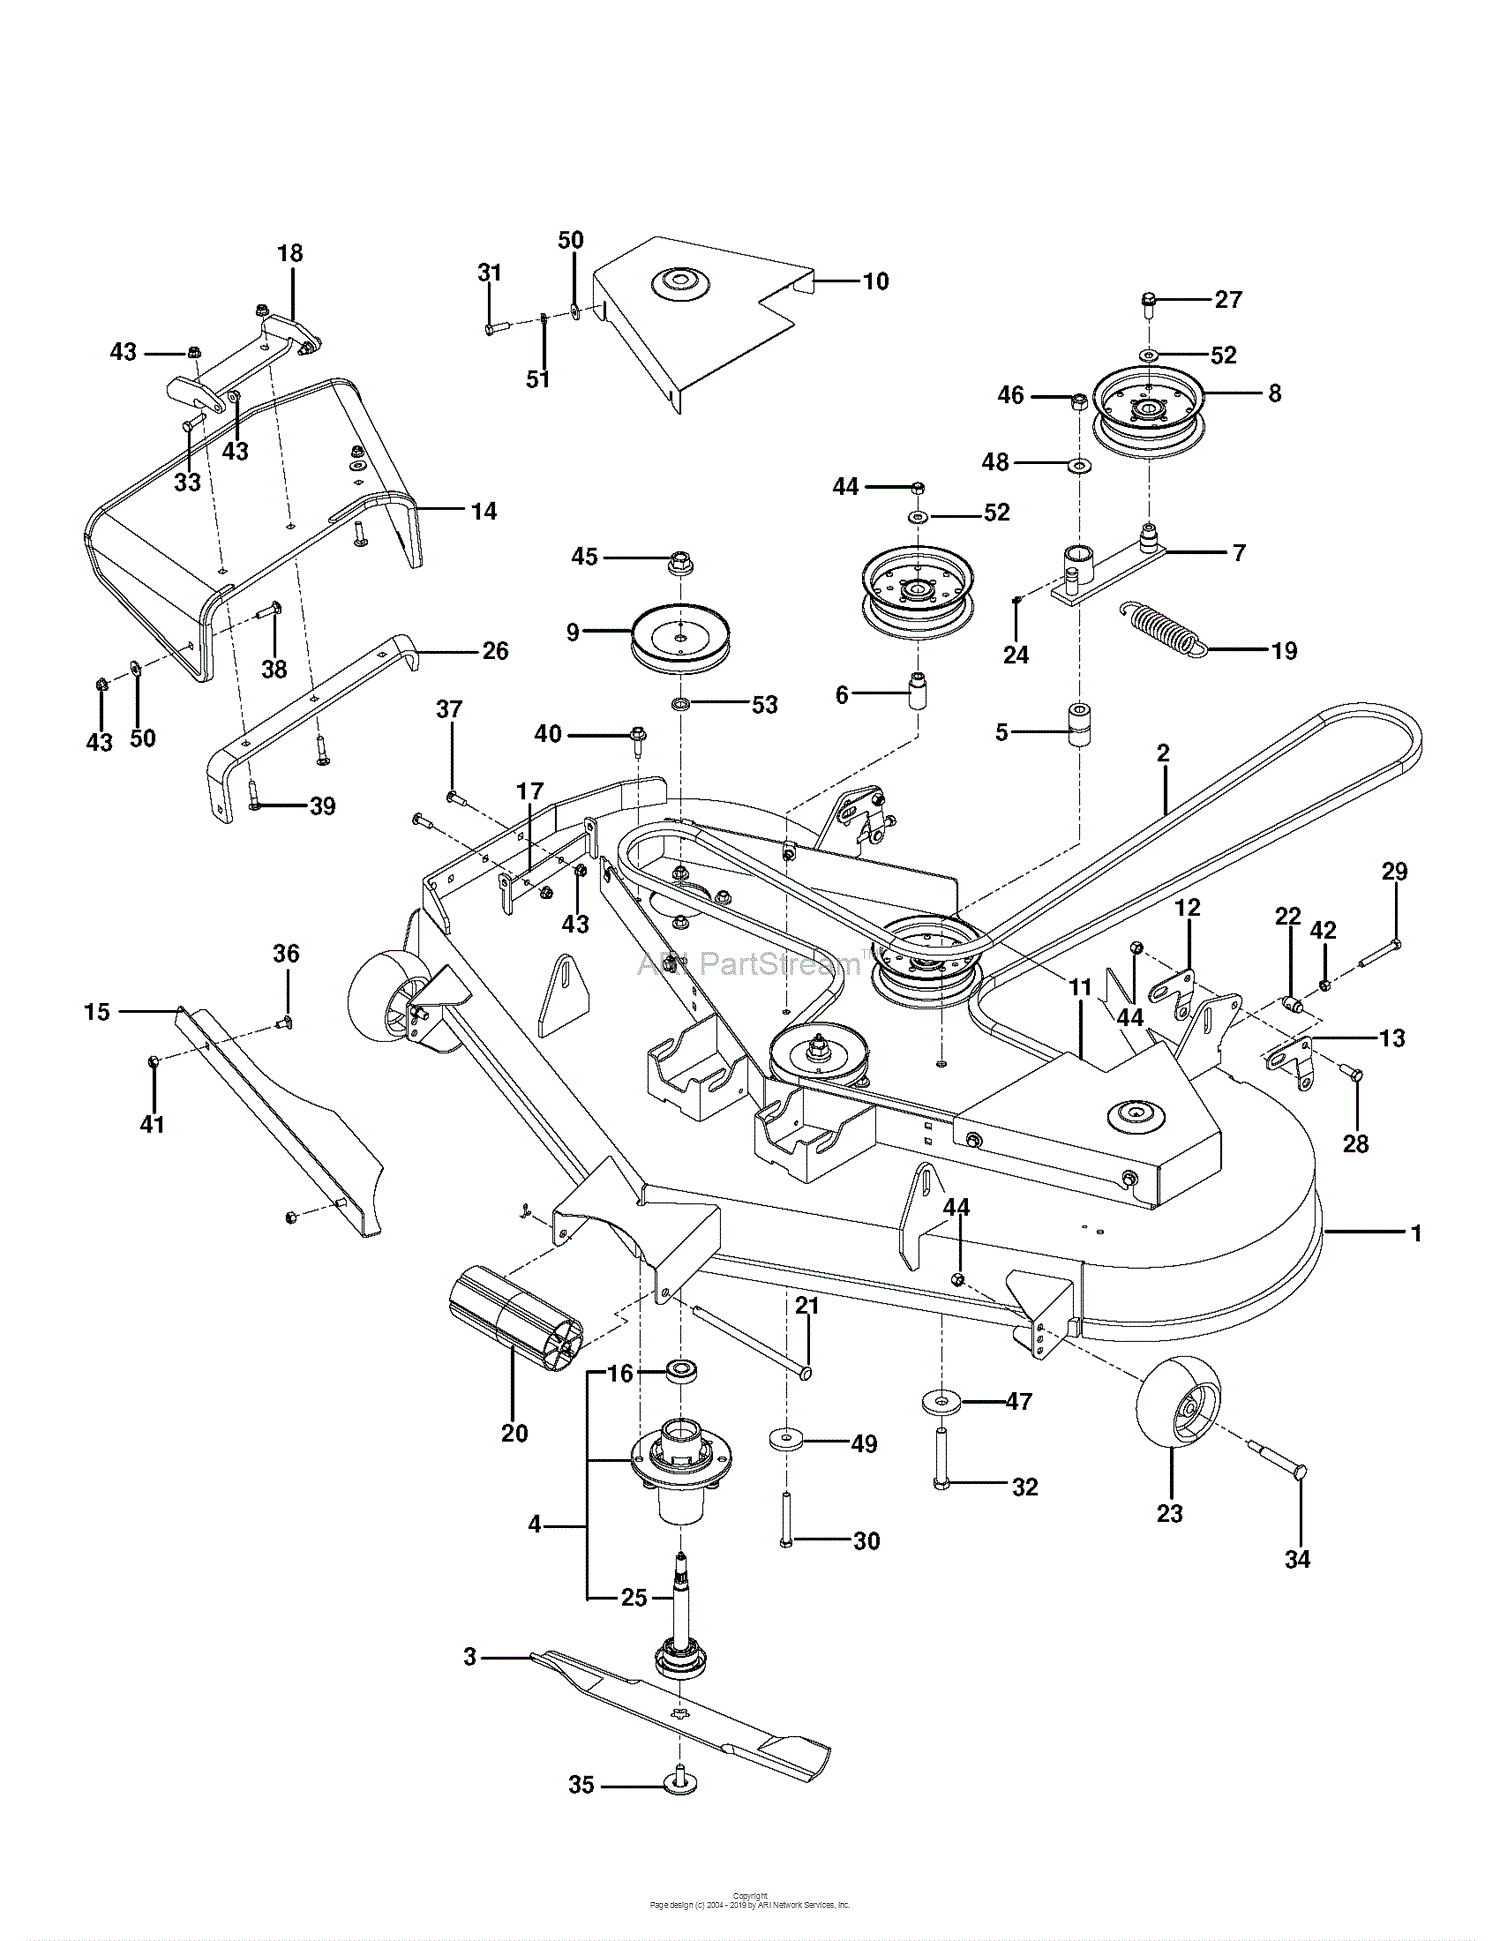 https://az417944.vo.msecnd.net/diagrams/manufacturer/husqvarna/zero-turn-commercial/m-zt52-967177006-2013-08/mower-deck-cutting-deck/diagram.gif